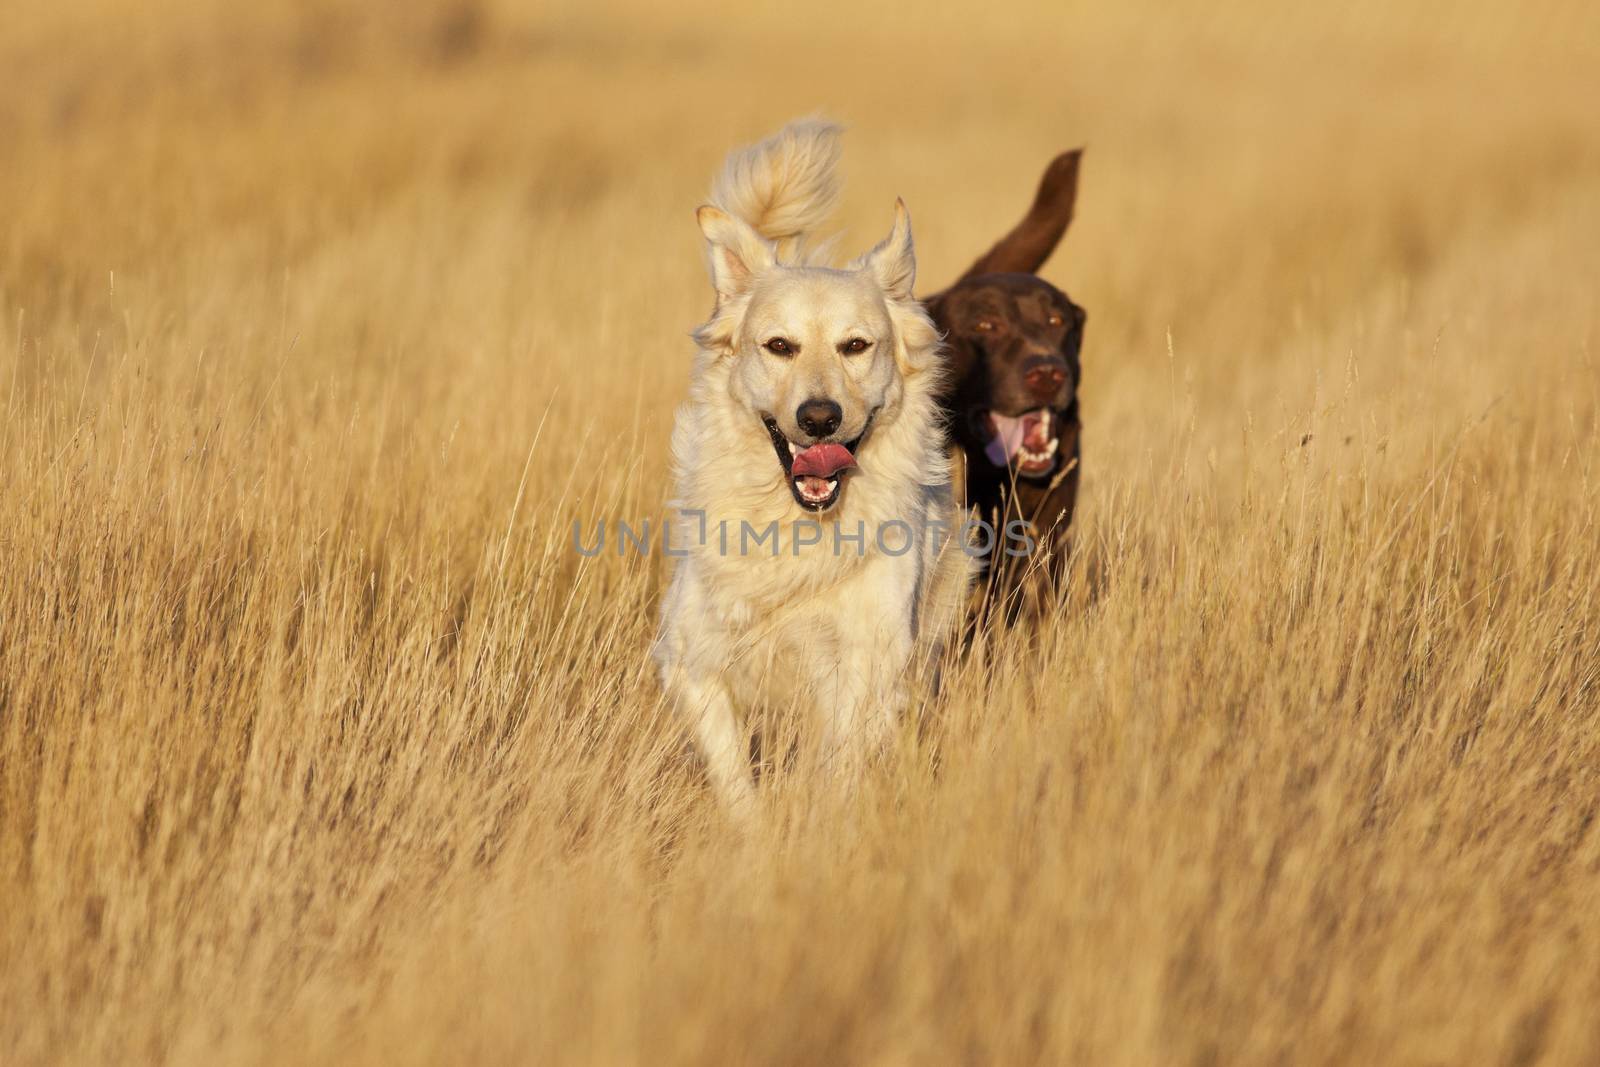 A Golden Labrador Retriever and a Chocolate Lab Retriever running through a harvested wheat field during evening's golden hour.